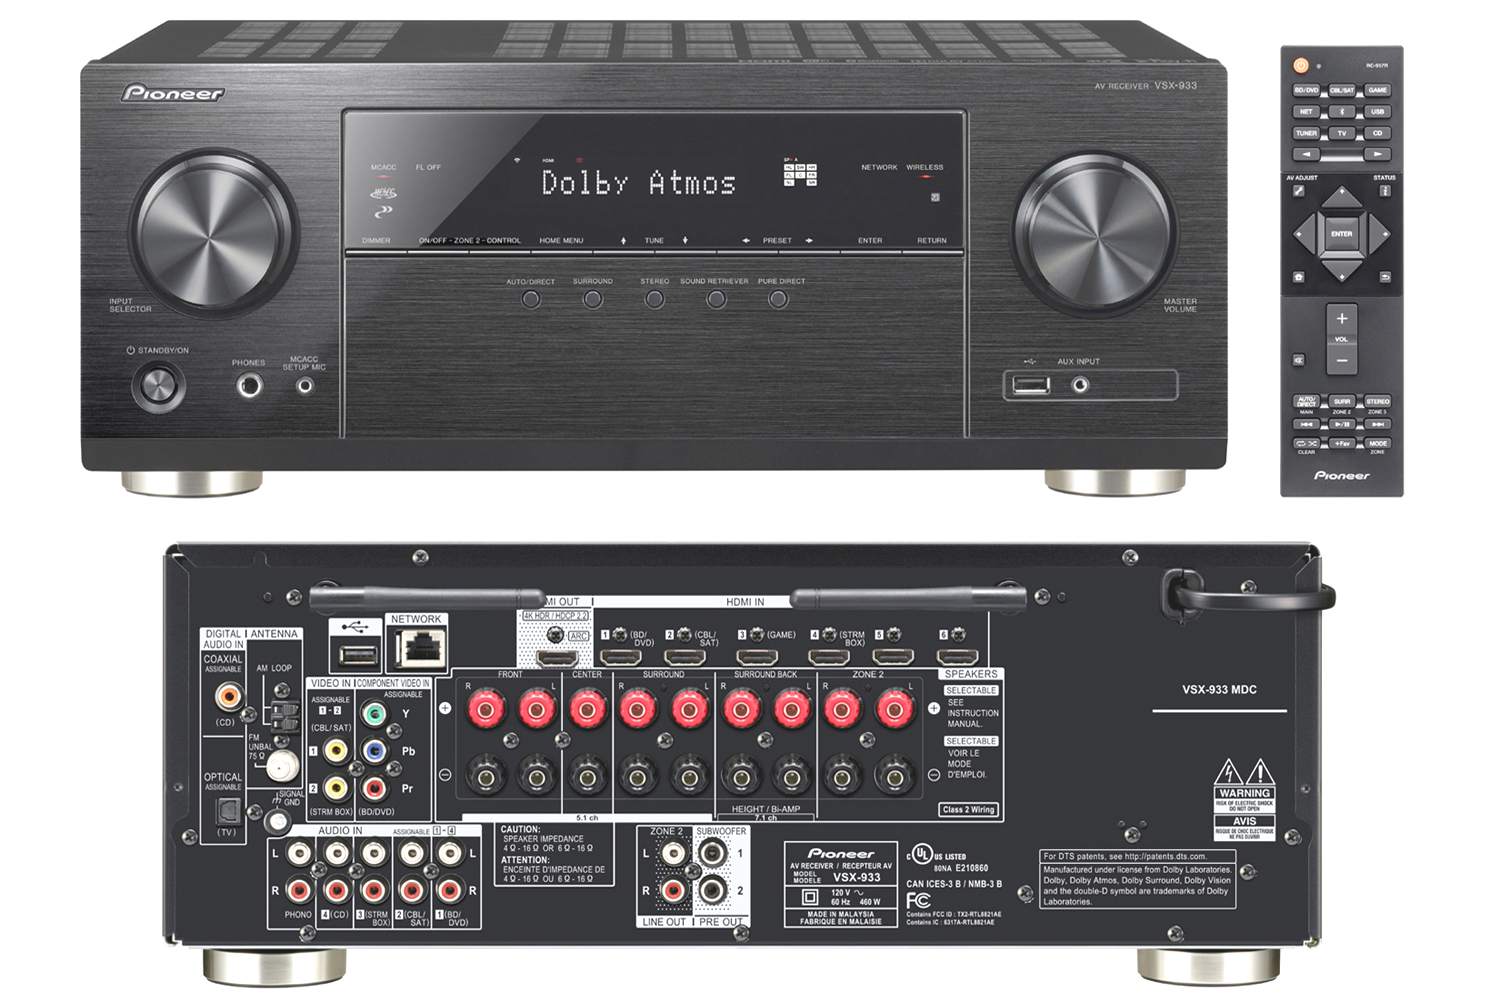 Pioneer VSX-933 Dolby Atmos hemmabiomottagare